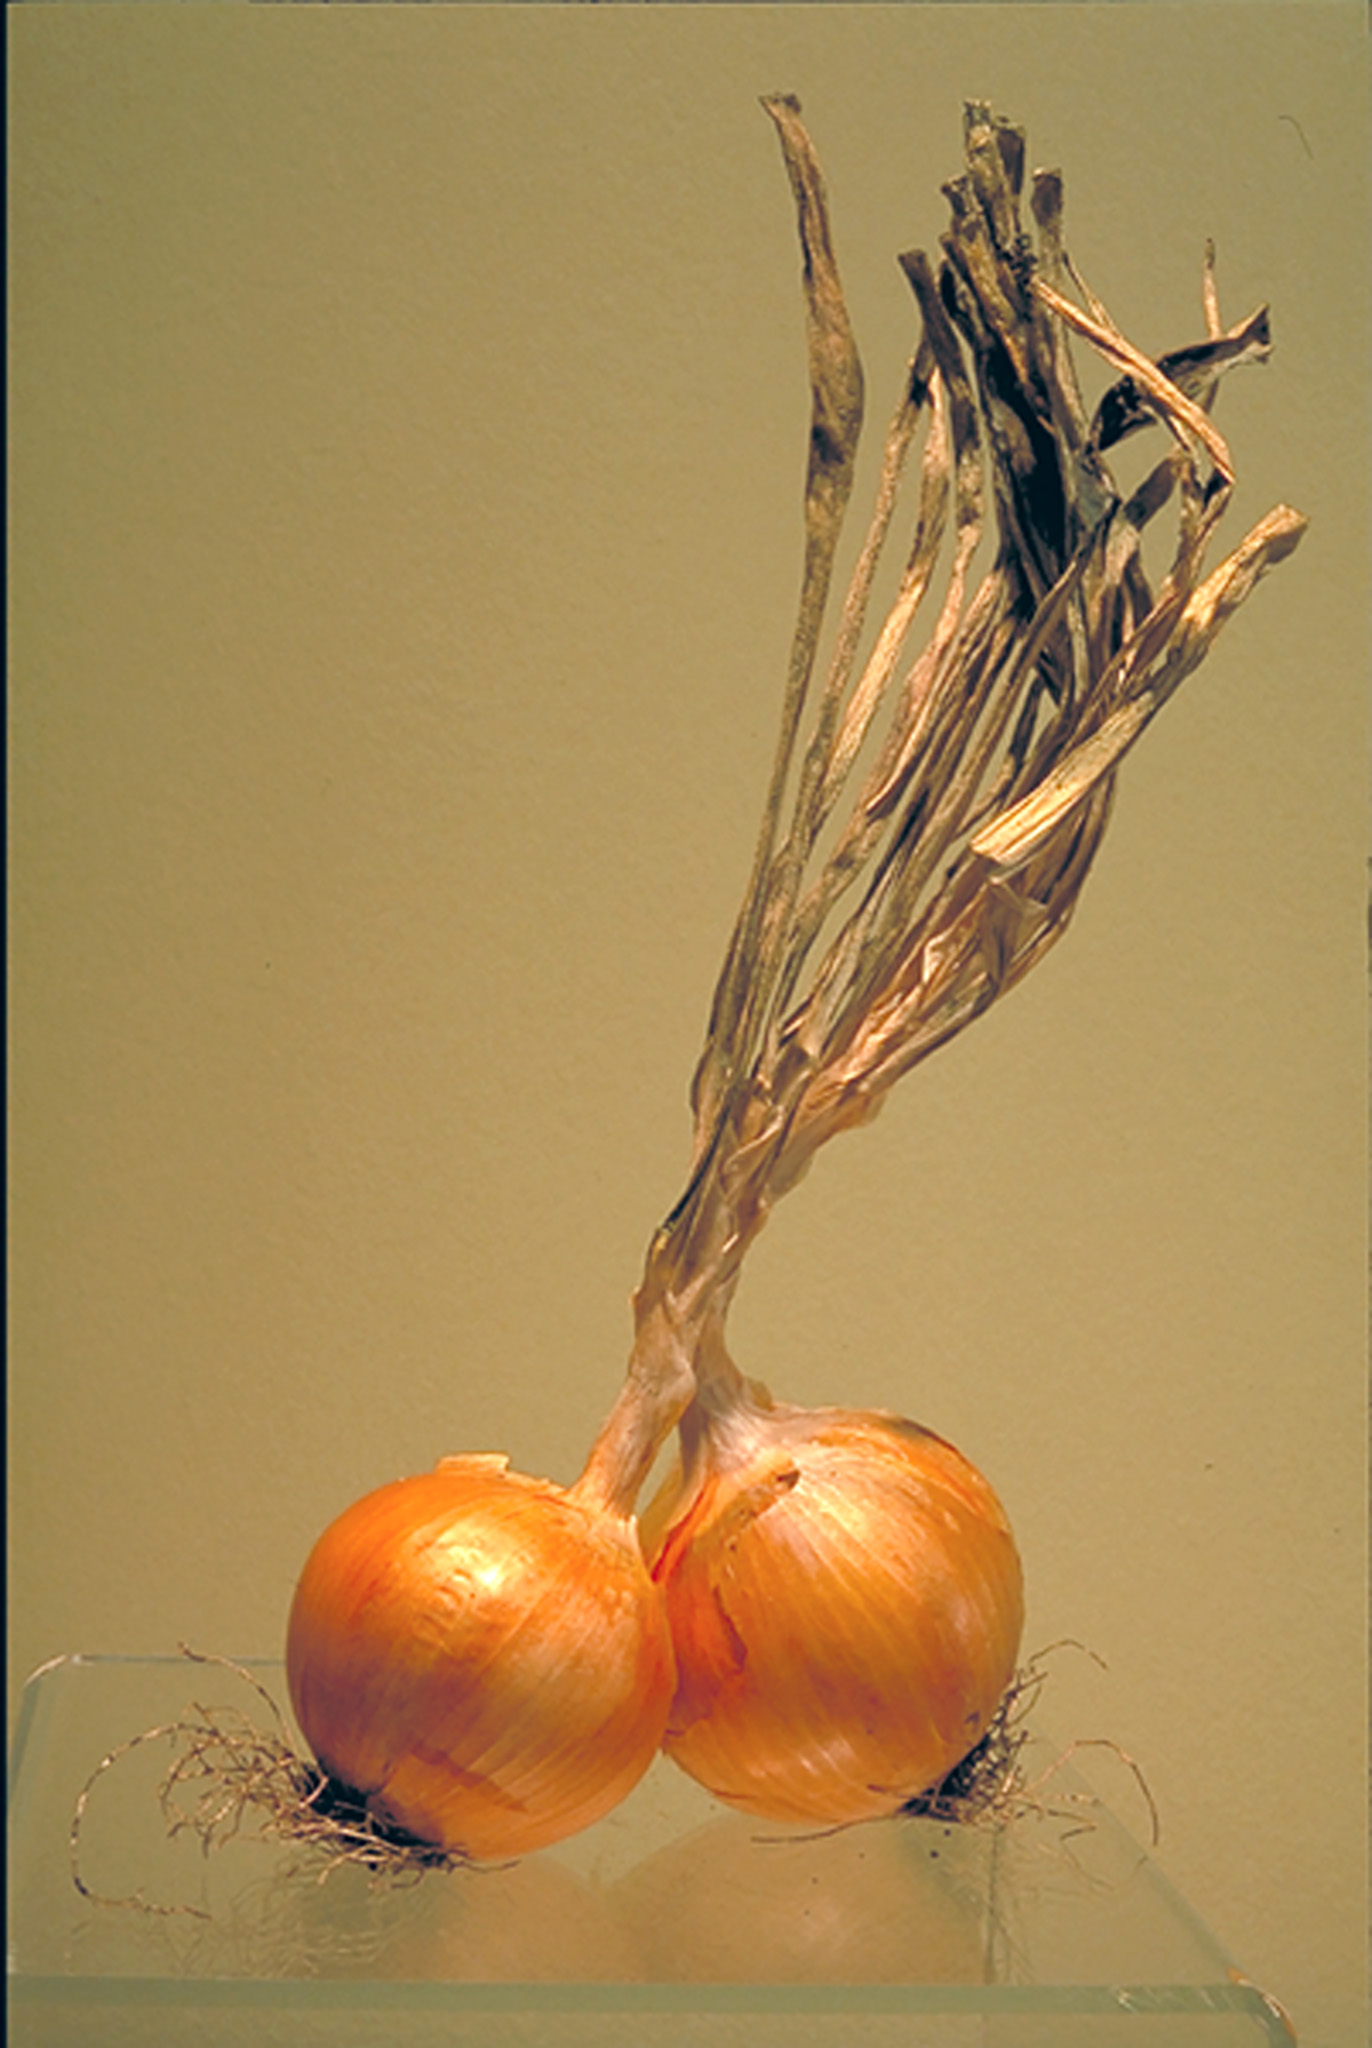 Onions, 2001